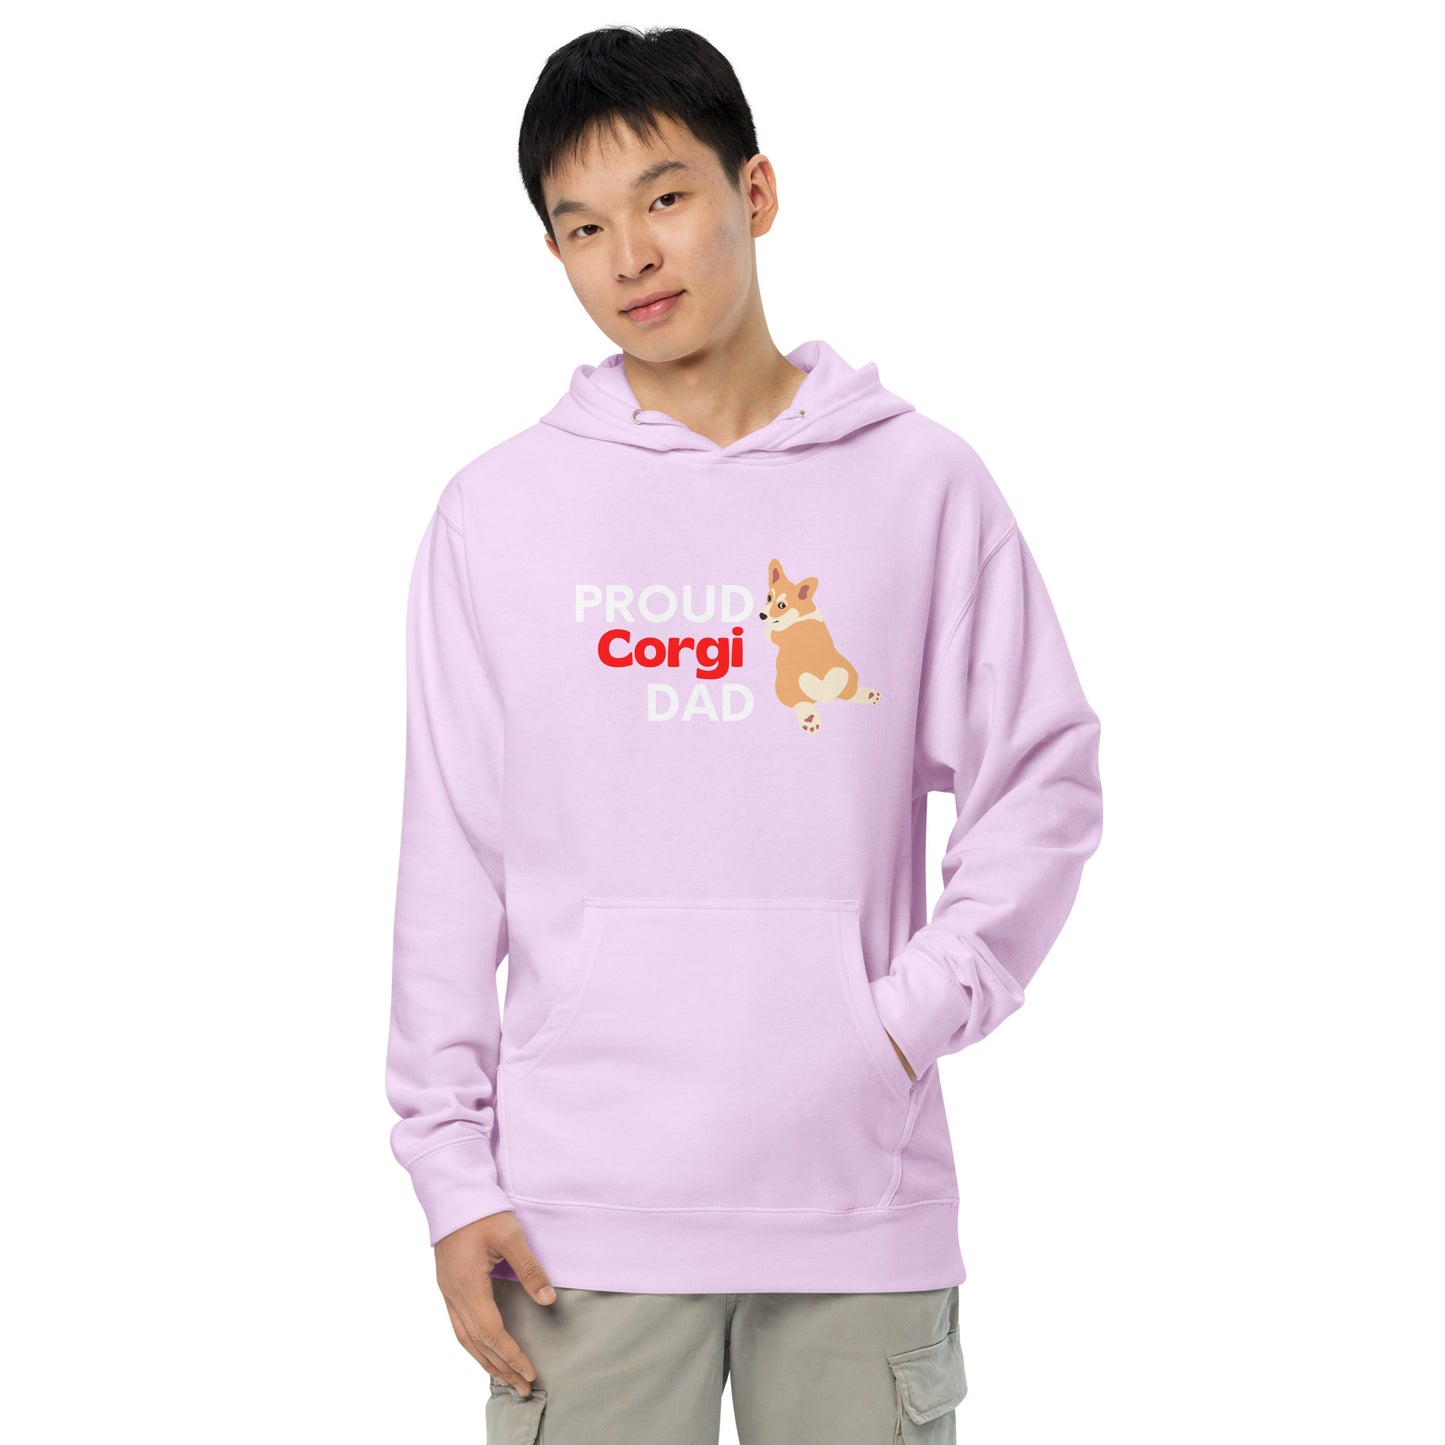 Men's hoodie 'PROUD Corgi DAD'